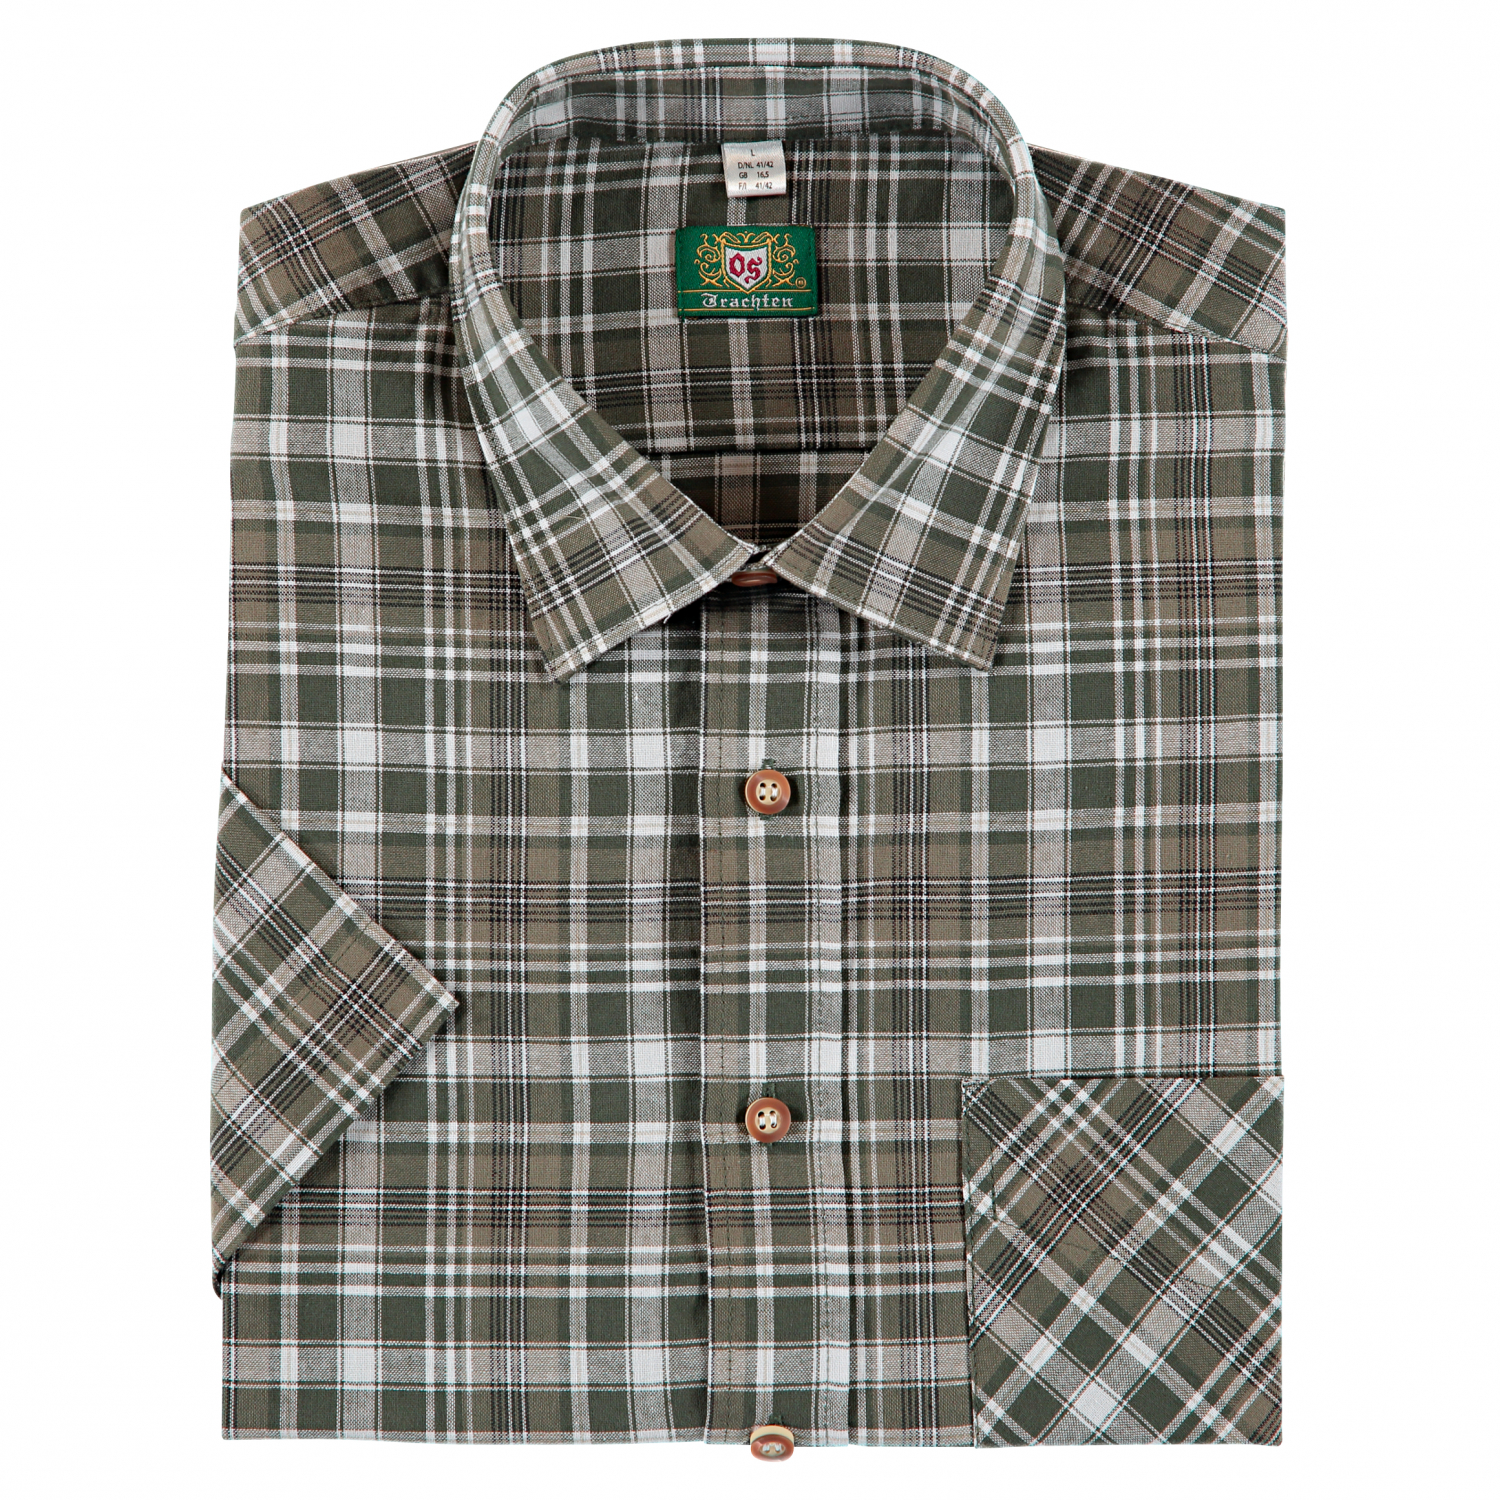 OS Trachten Men's Shortsleeve Shirt (checkered, with breast pocket) 